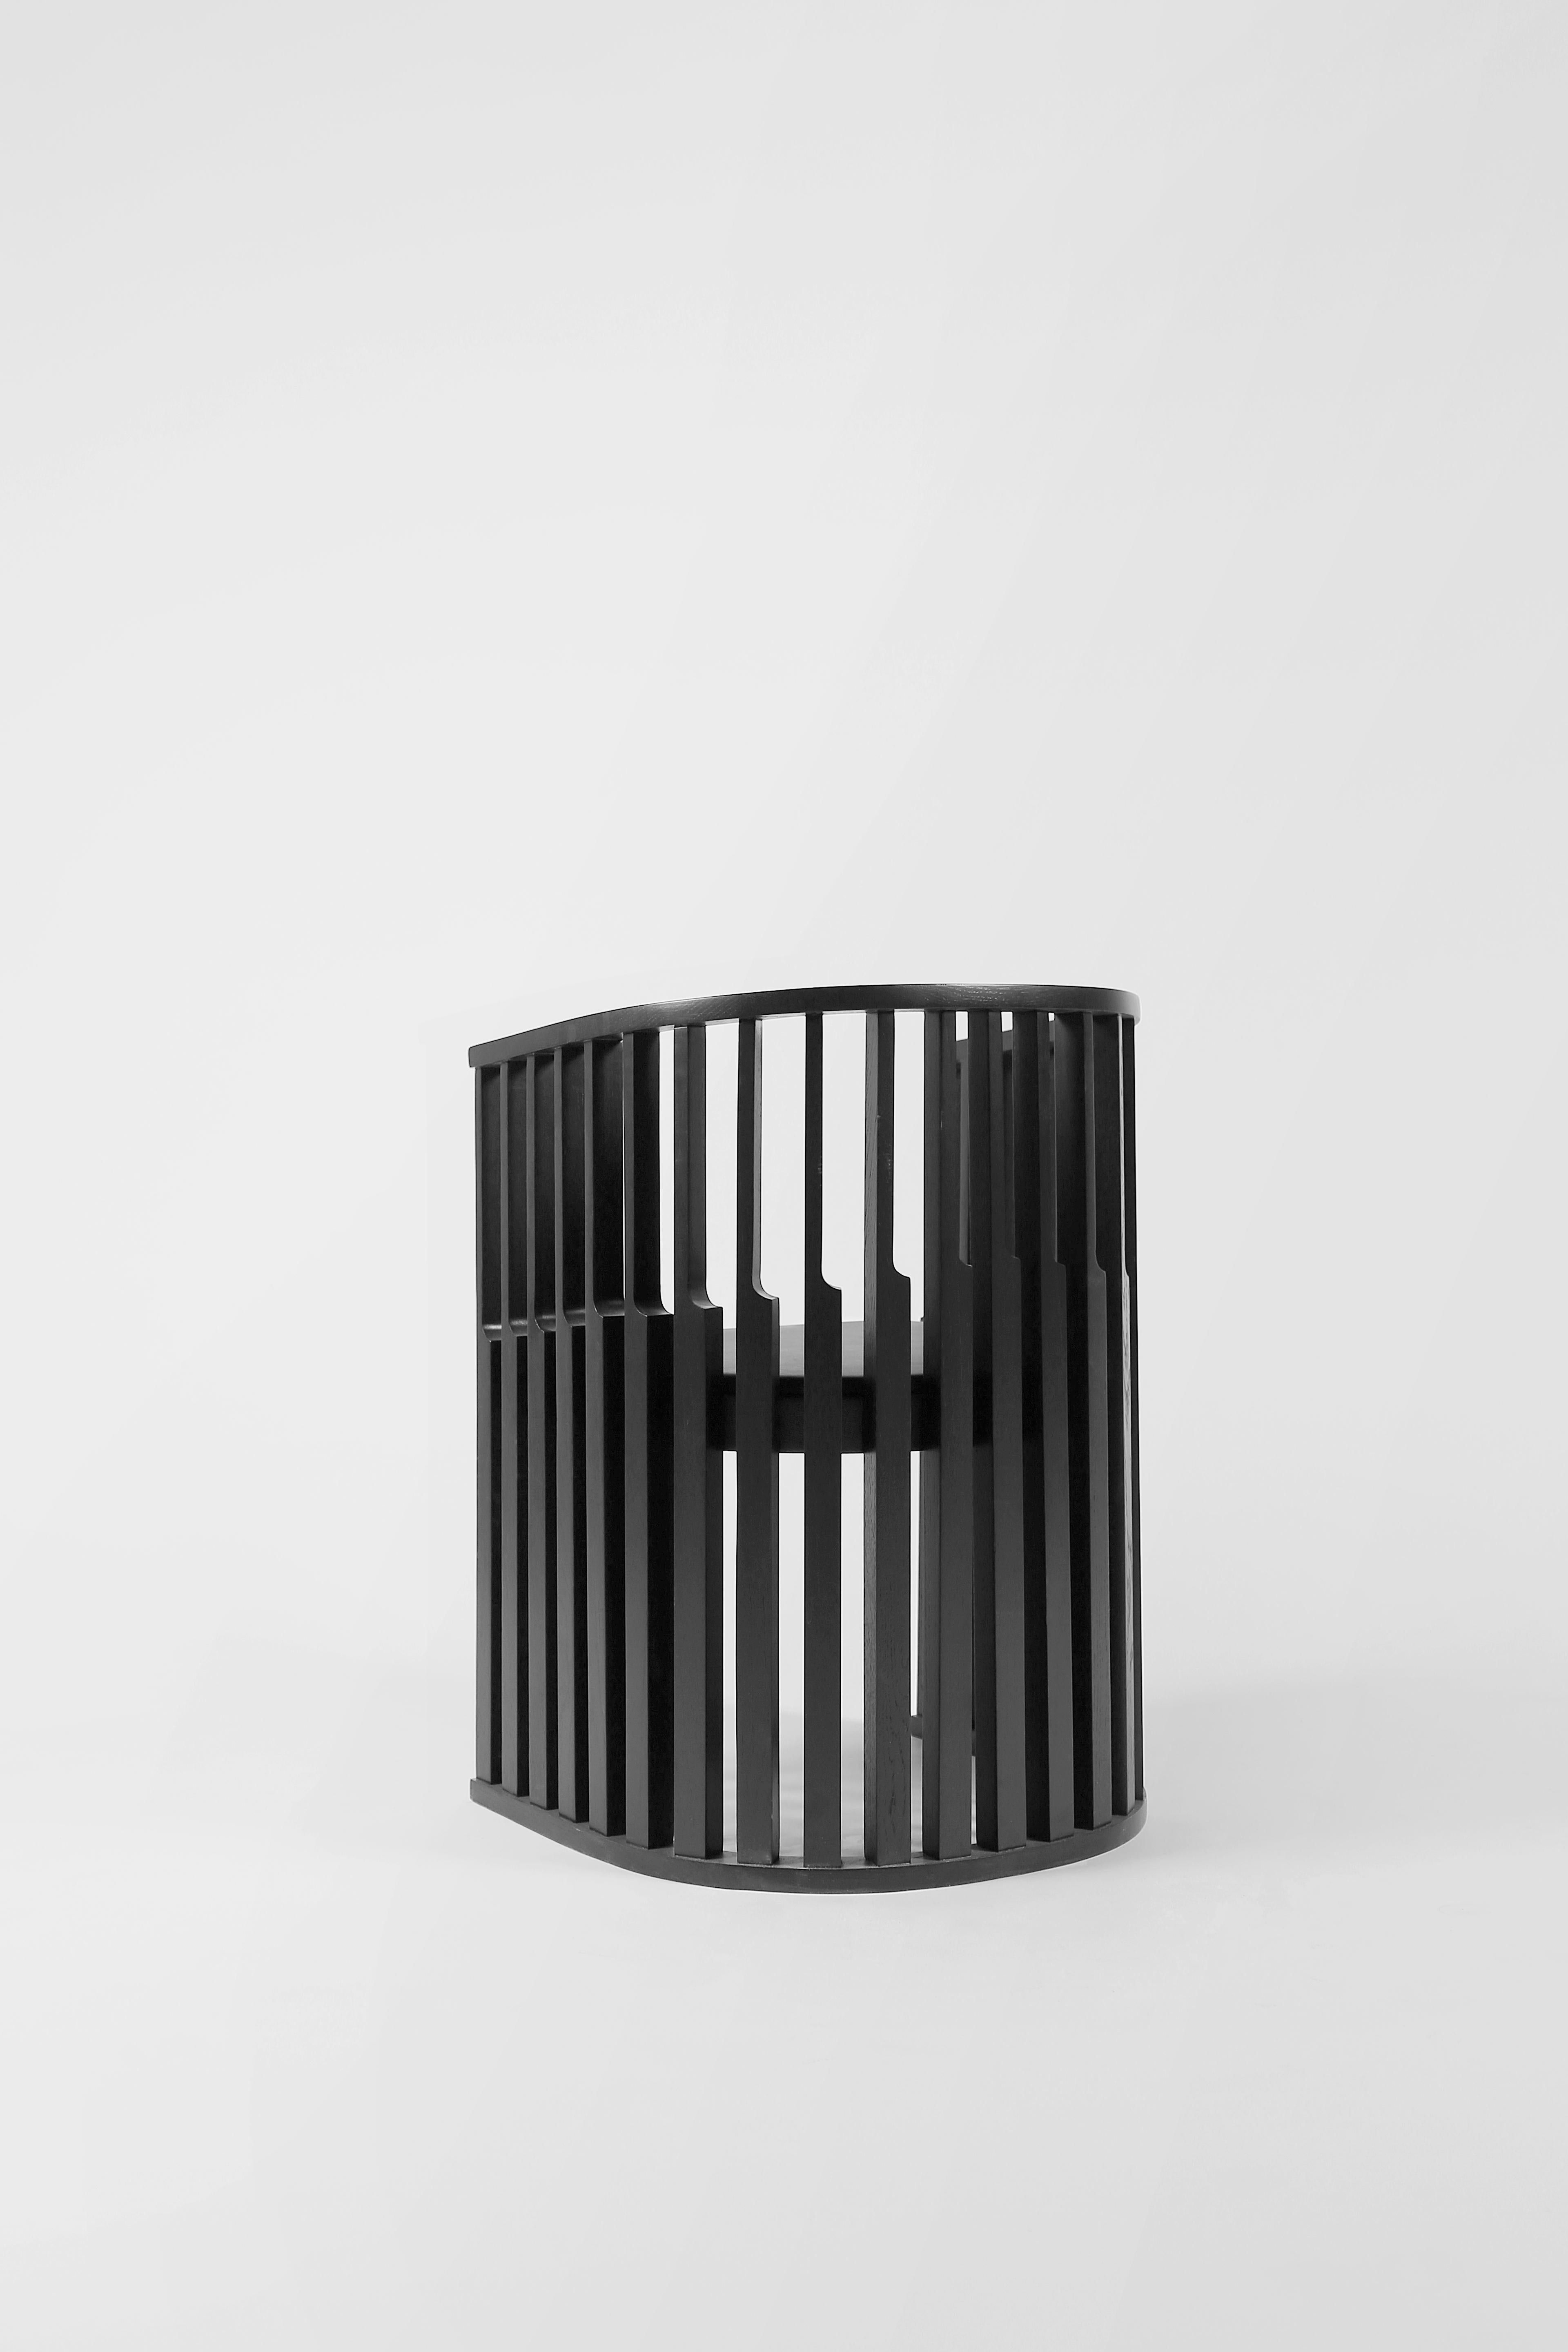 Post-Modern Black Aceleración Chair by Joel Escalona For Sale